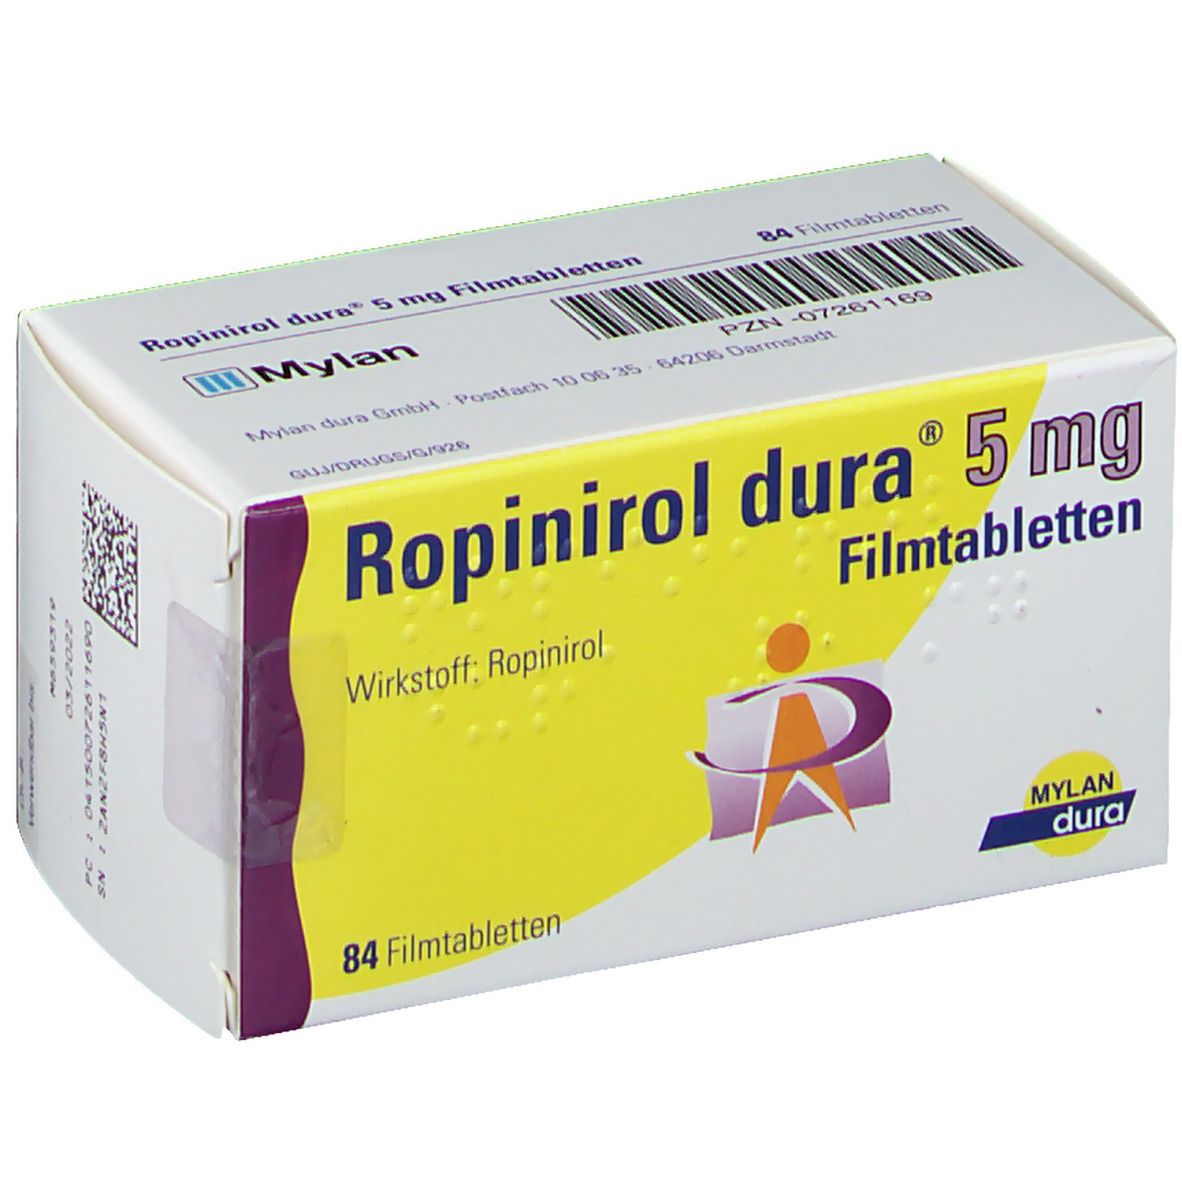 Ropinirol dura® 5 mg